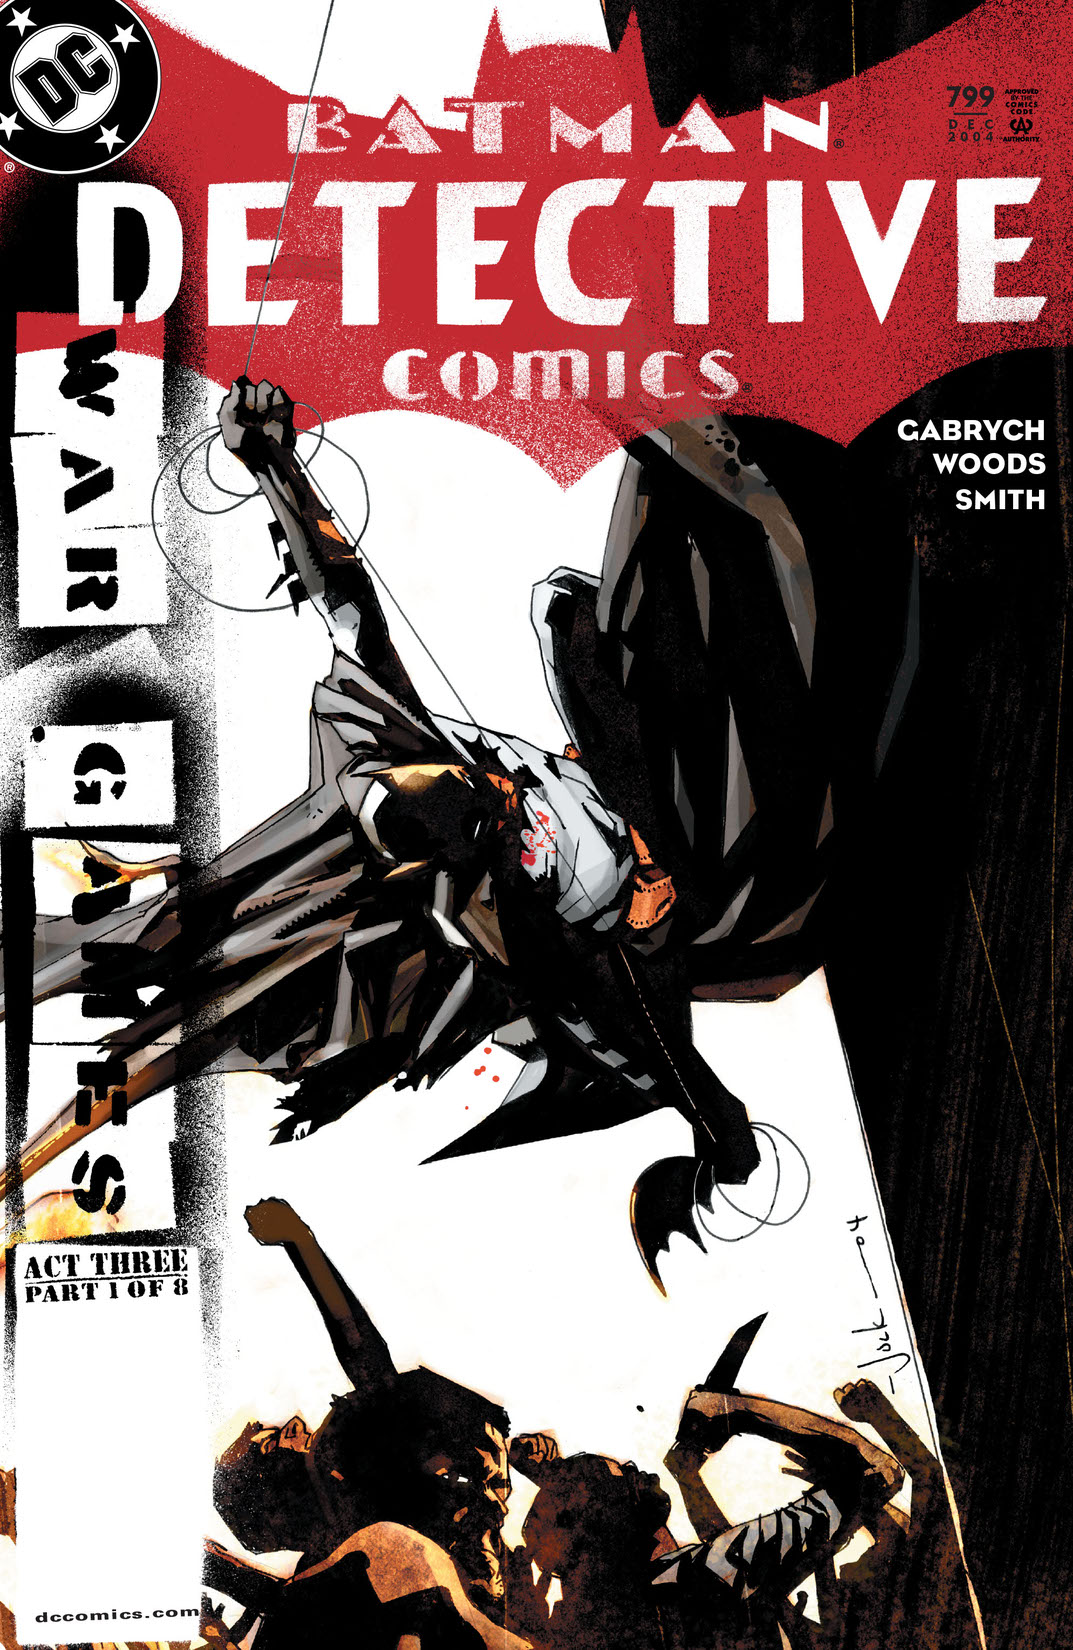 Detective Comics (1937-) #799 preview images